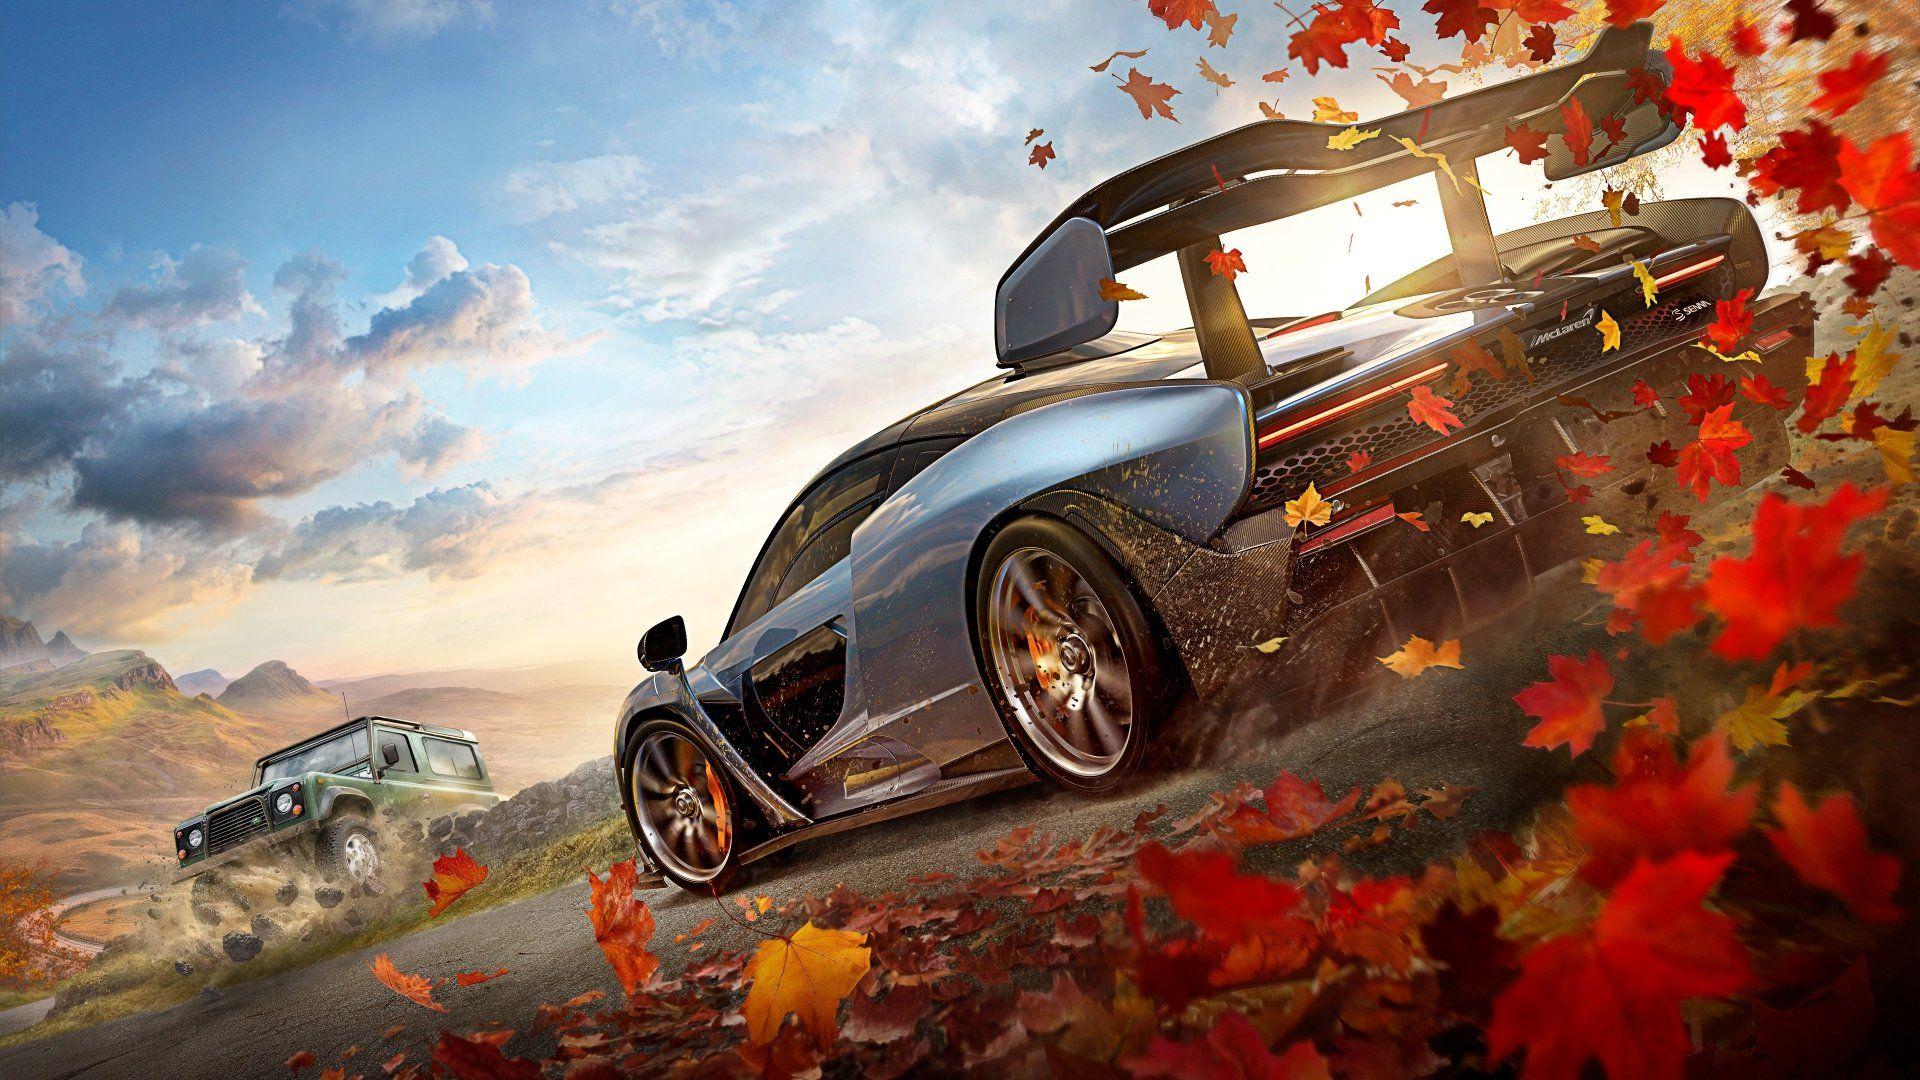 Forza Horizon 4 Wallpapers - Top Free